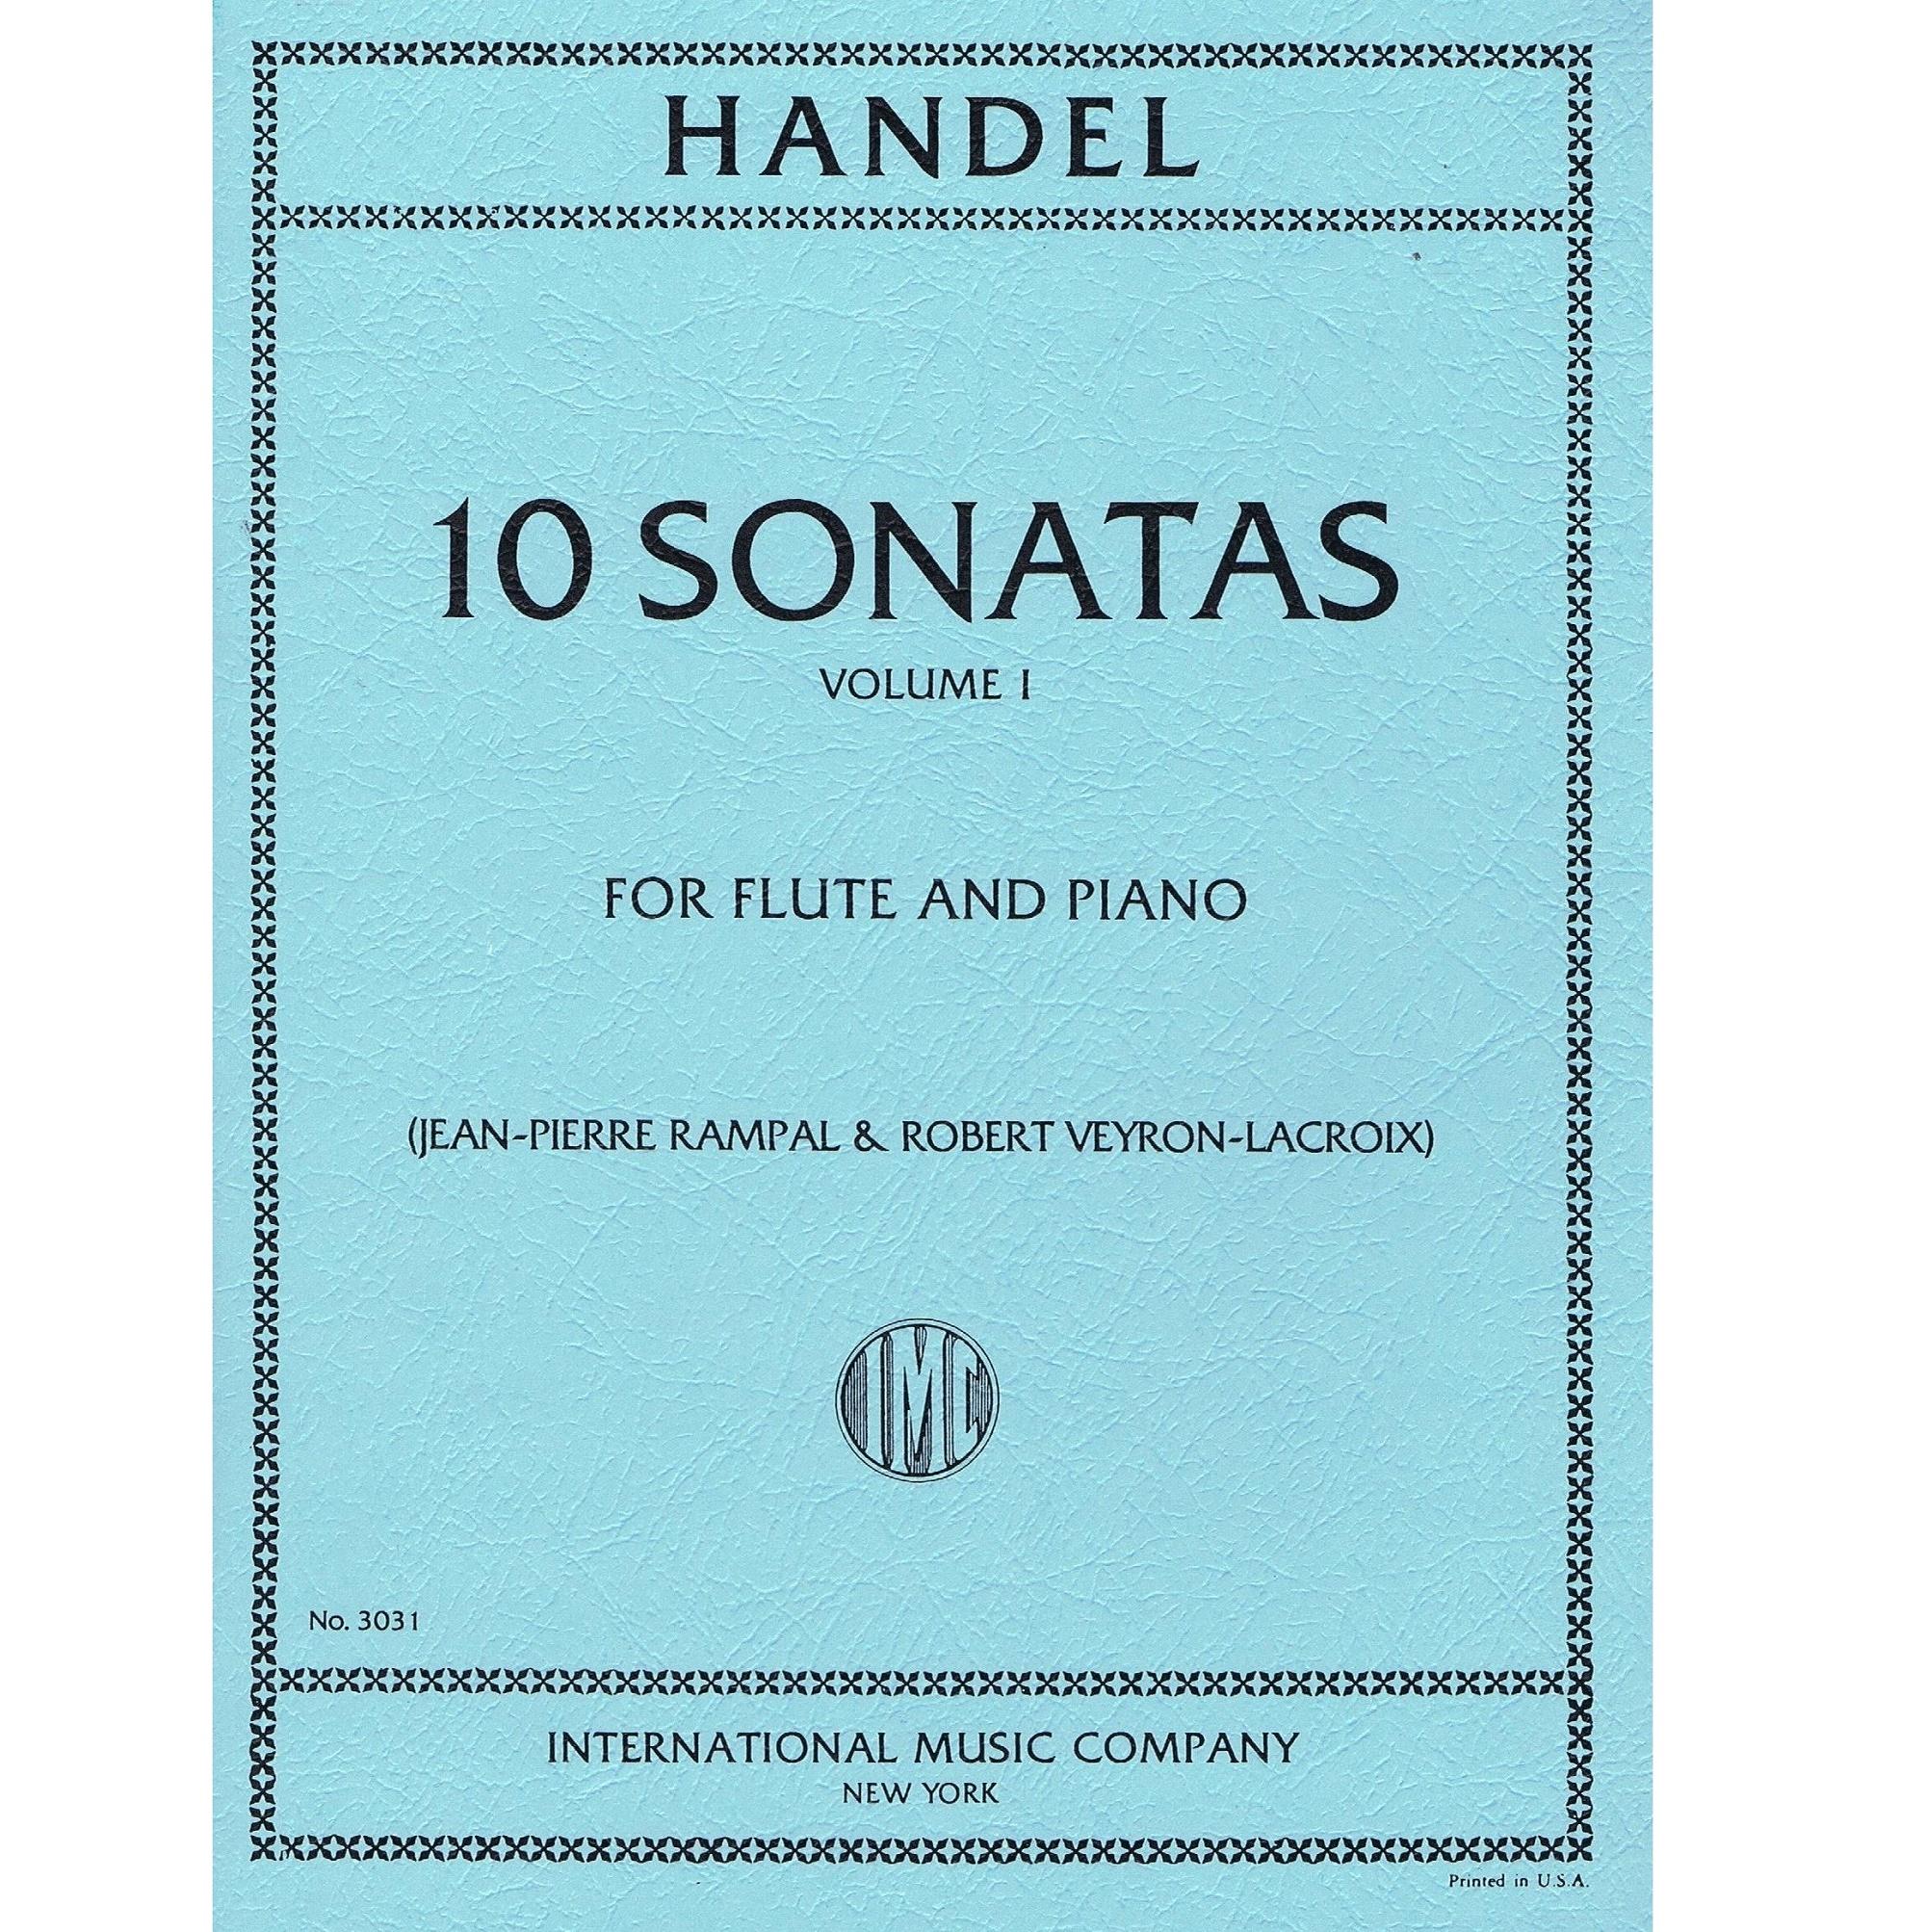 Handel Ten Sonatas Volume I for flute and piano - International Music Company